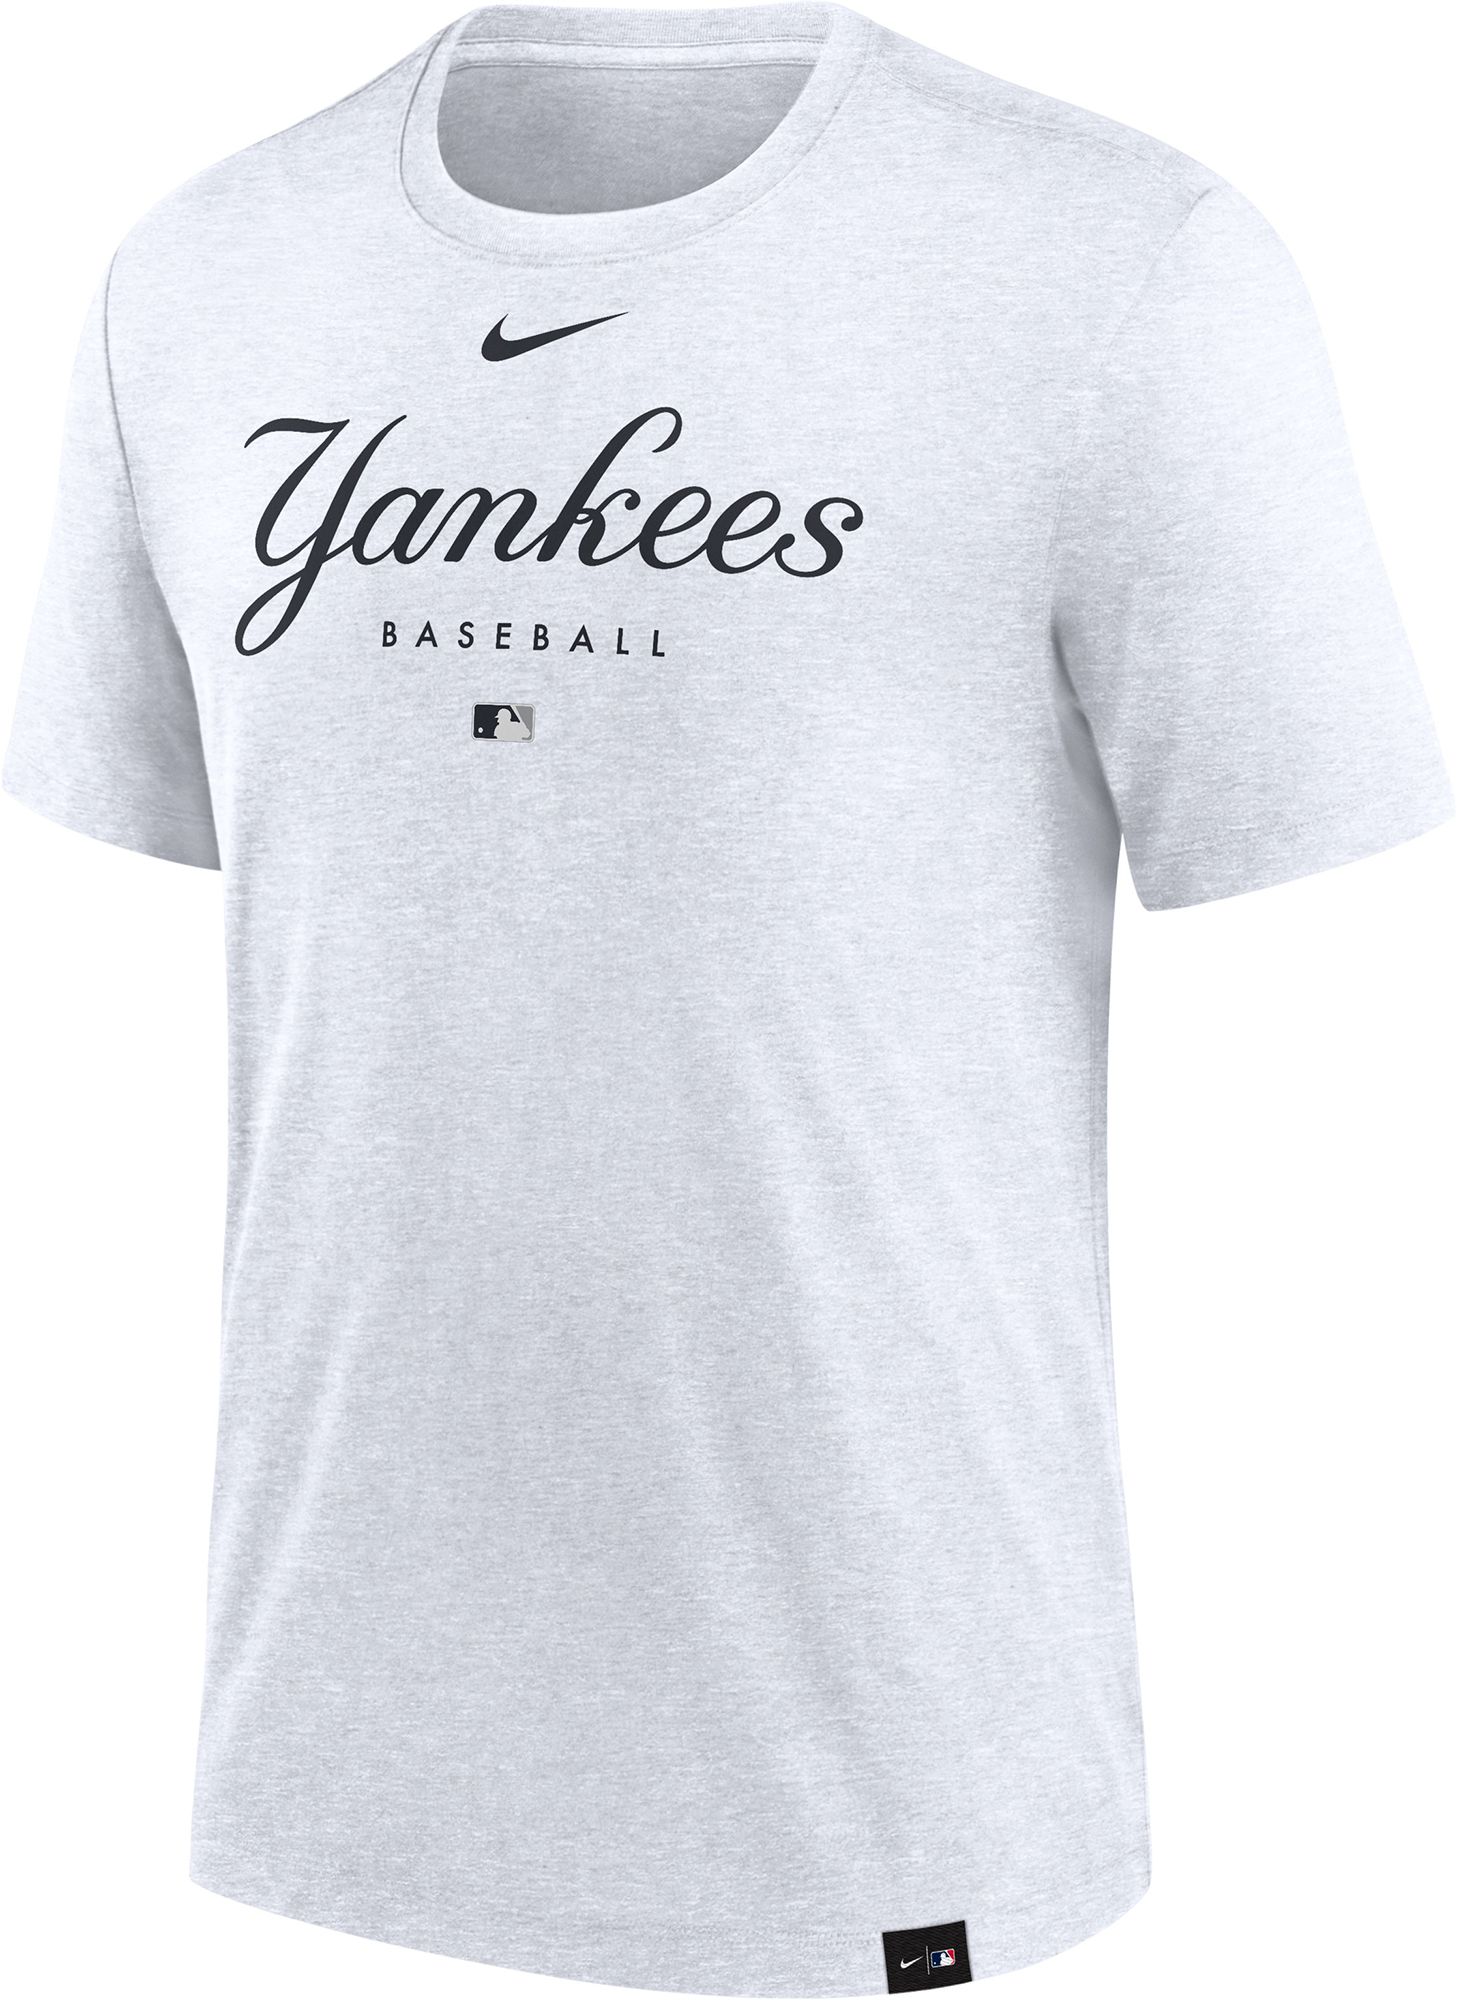 Jersey 47 Brand Yankees Logo T-shirt Jetblack - Fútbol Emotion